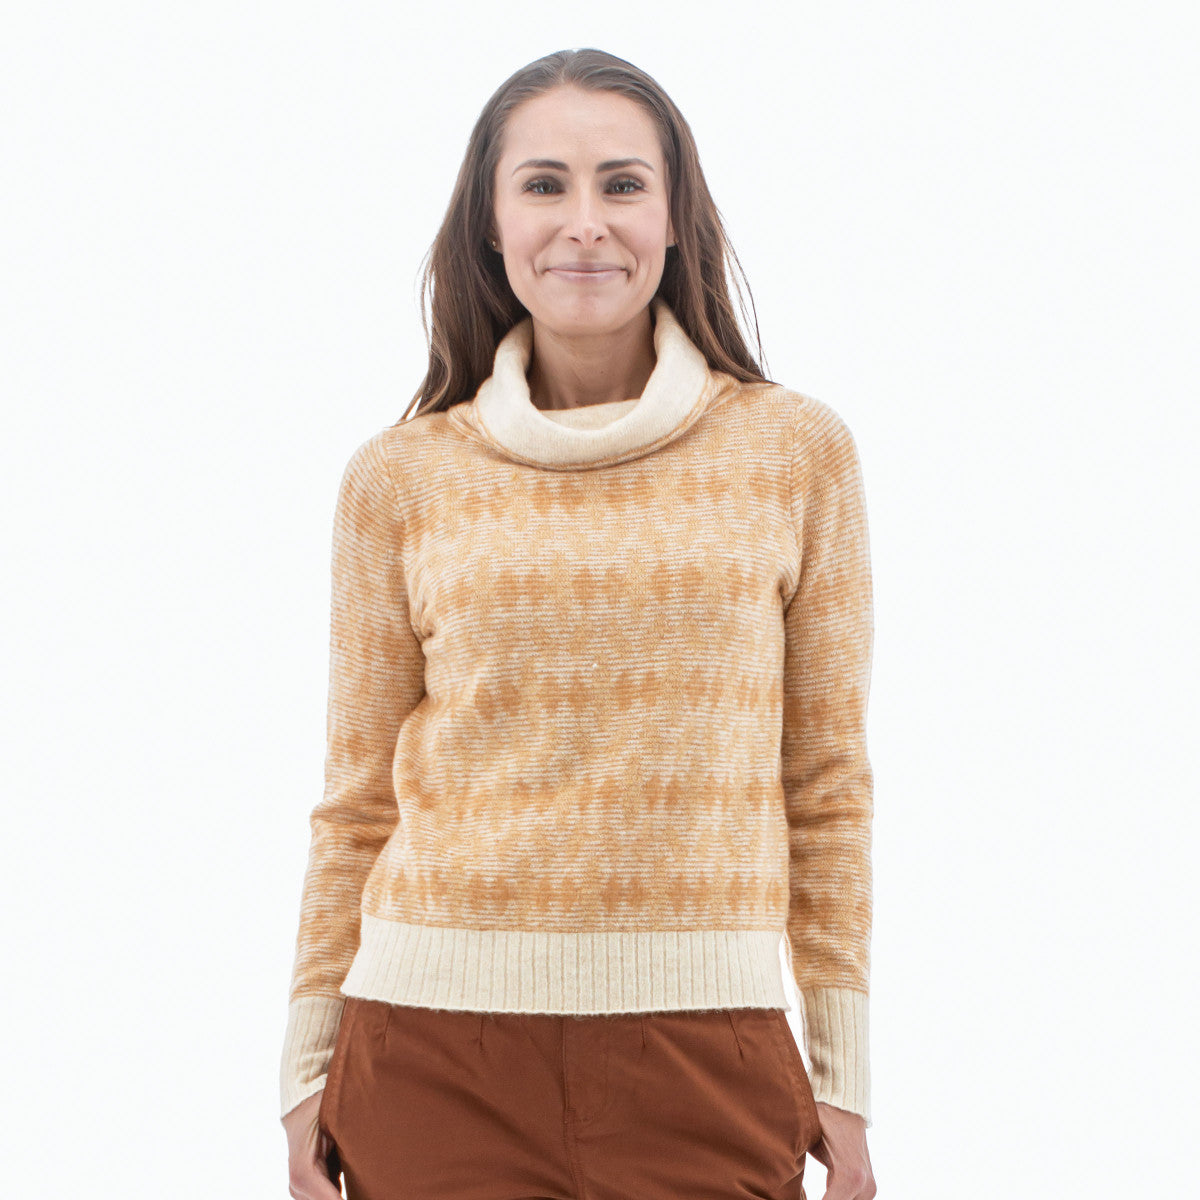 Paragon Sweater, Aventura Women's Apparel